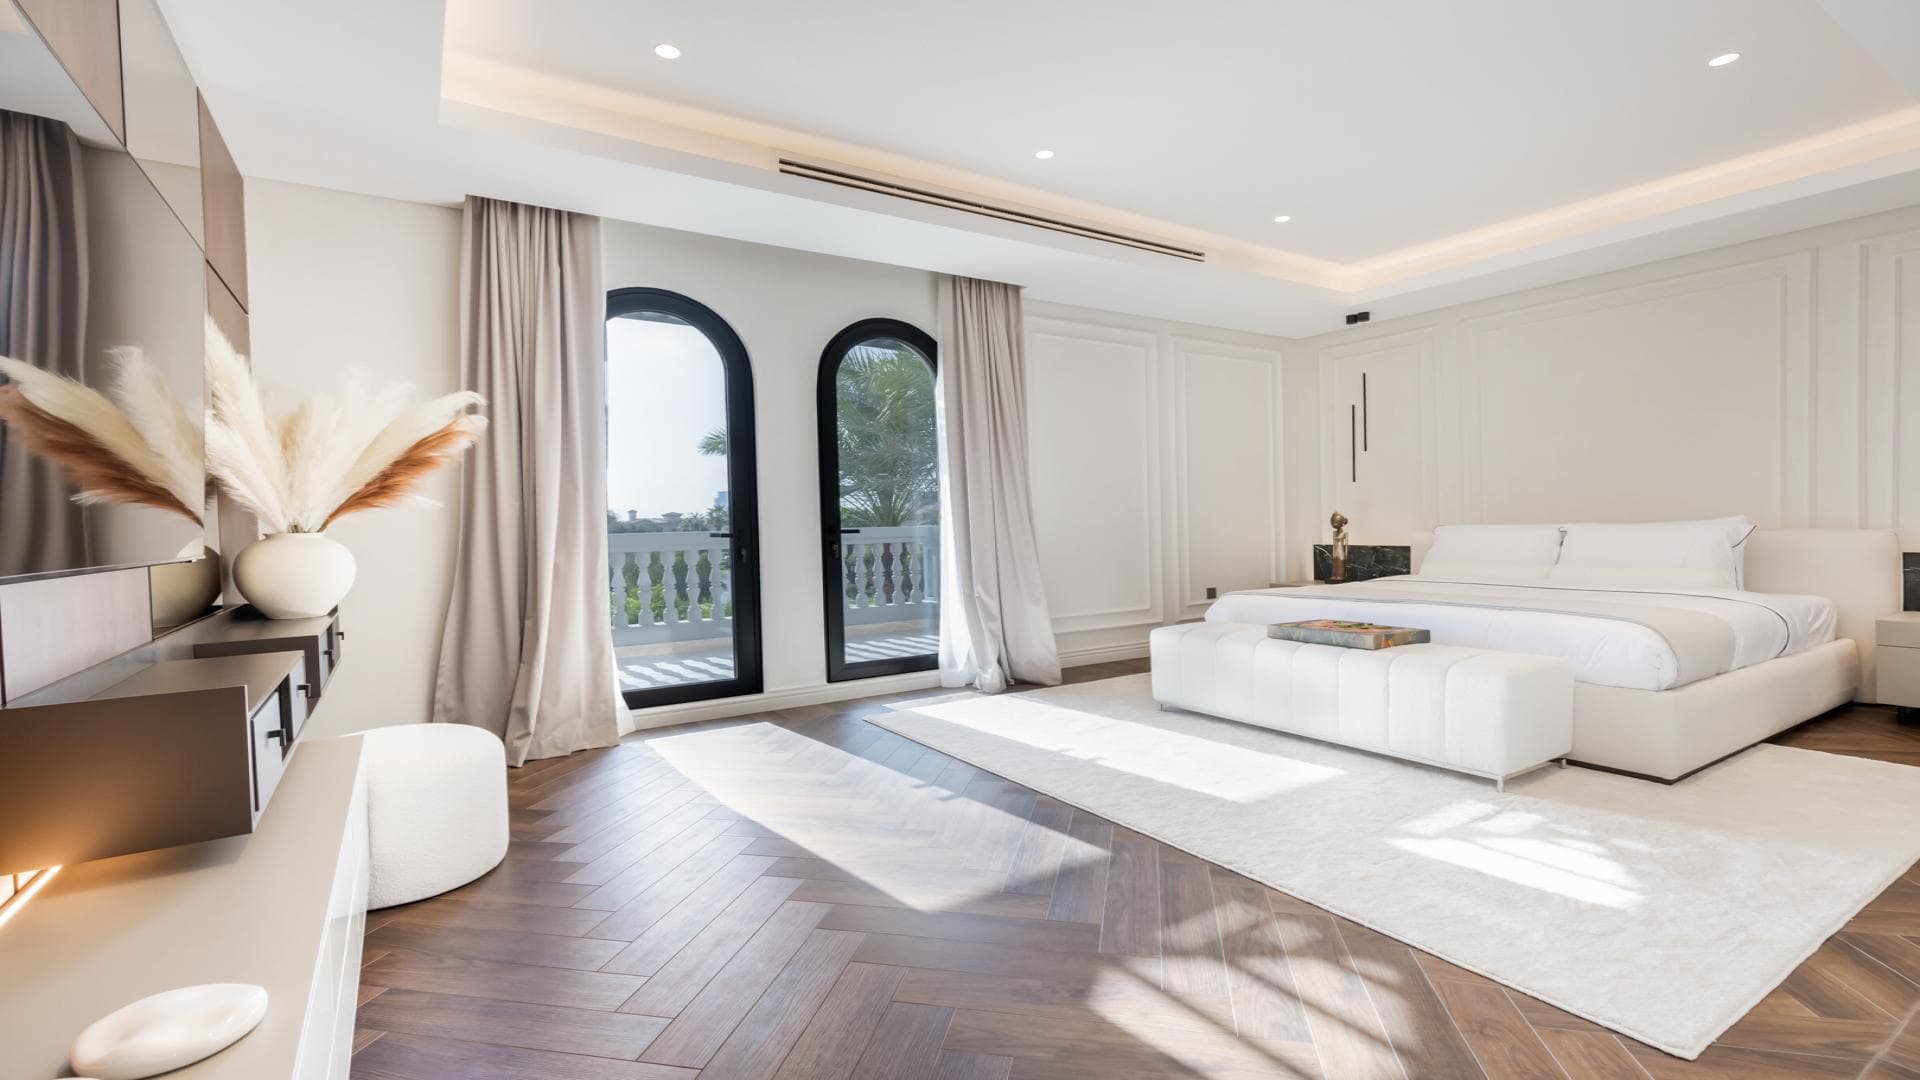 4 Bedroom Villa For Sale European Clusters Lp18552 3107651c76e52200.jpg